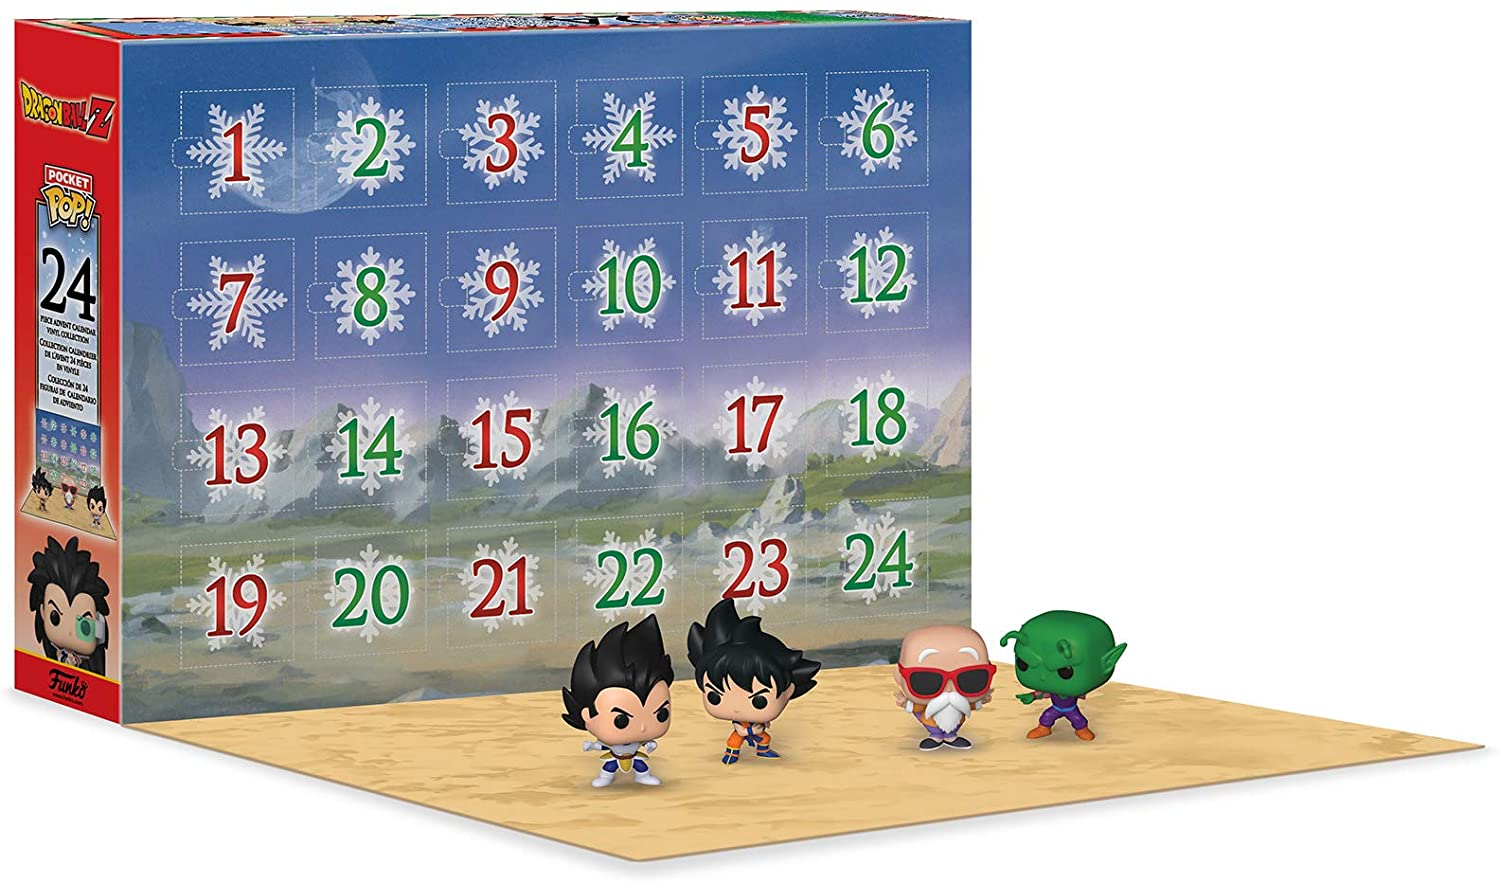 2020 Funko Dragon Ball Z Advent Calendar Available For Pre Order Now